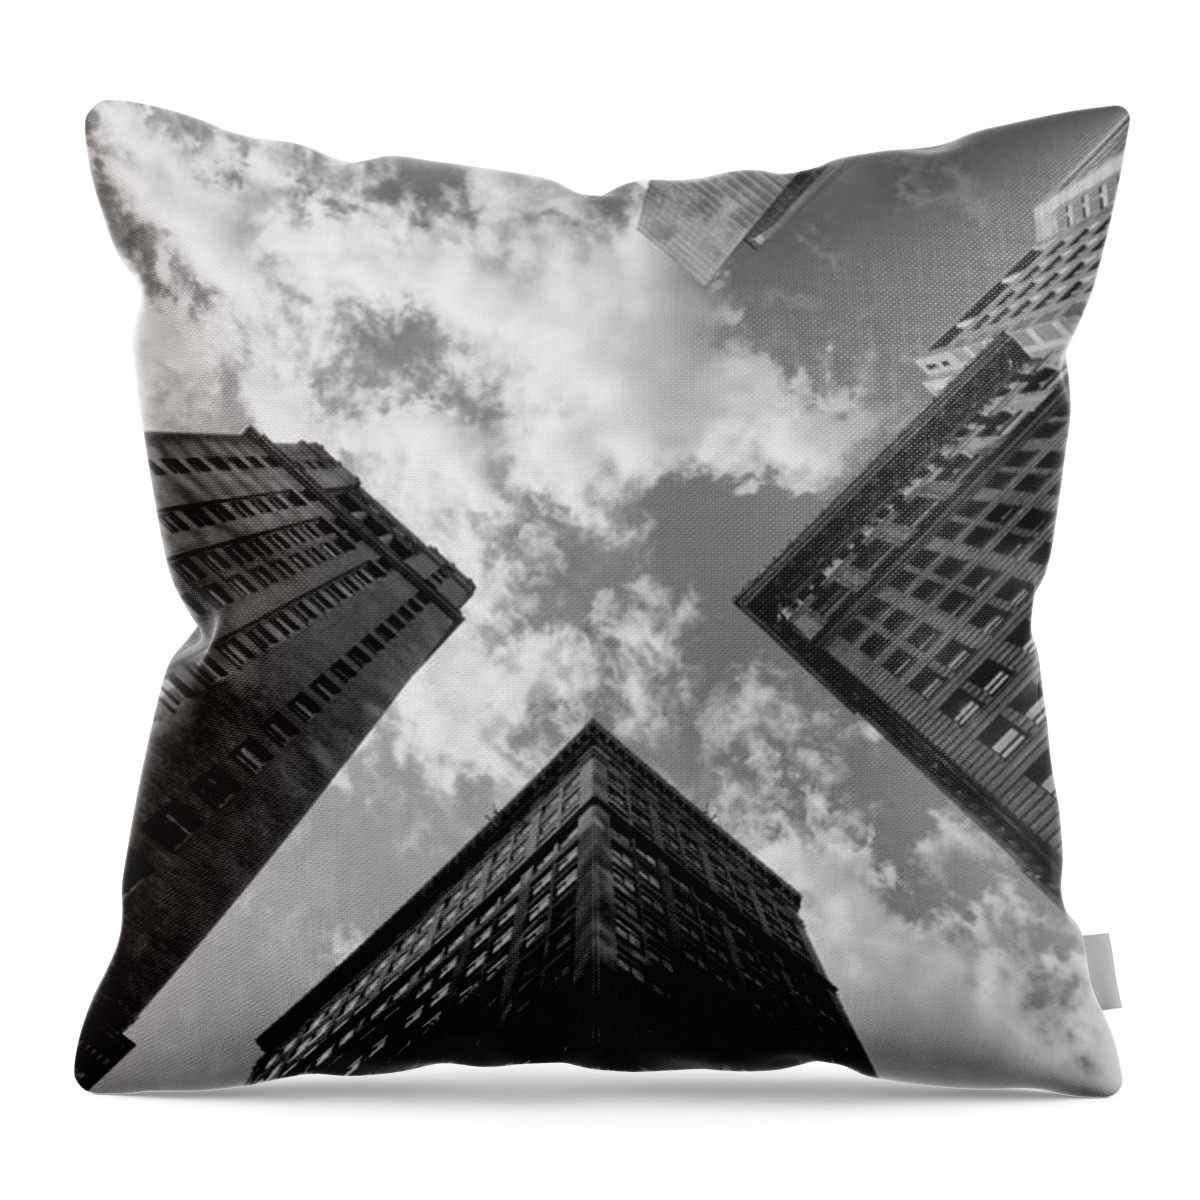 Cityscape Throw Pillow featuring the photograph Vertigo by Paul Watkins